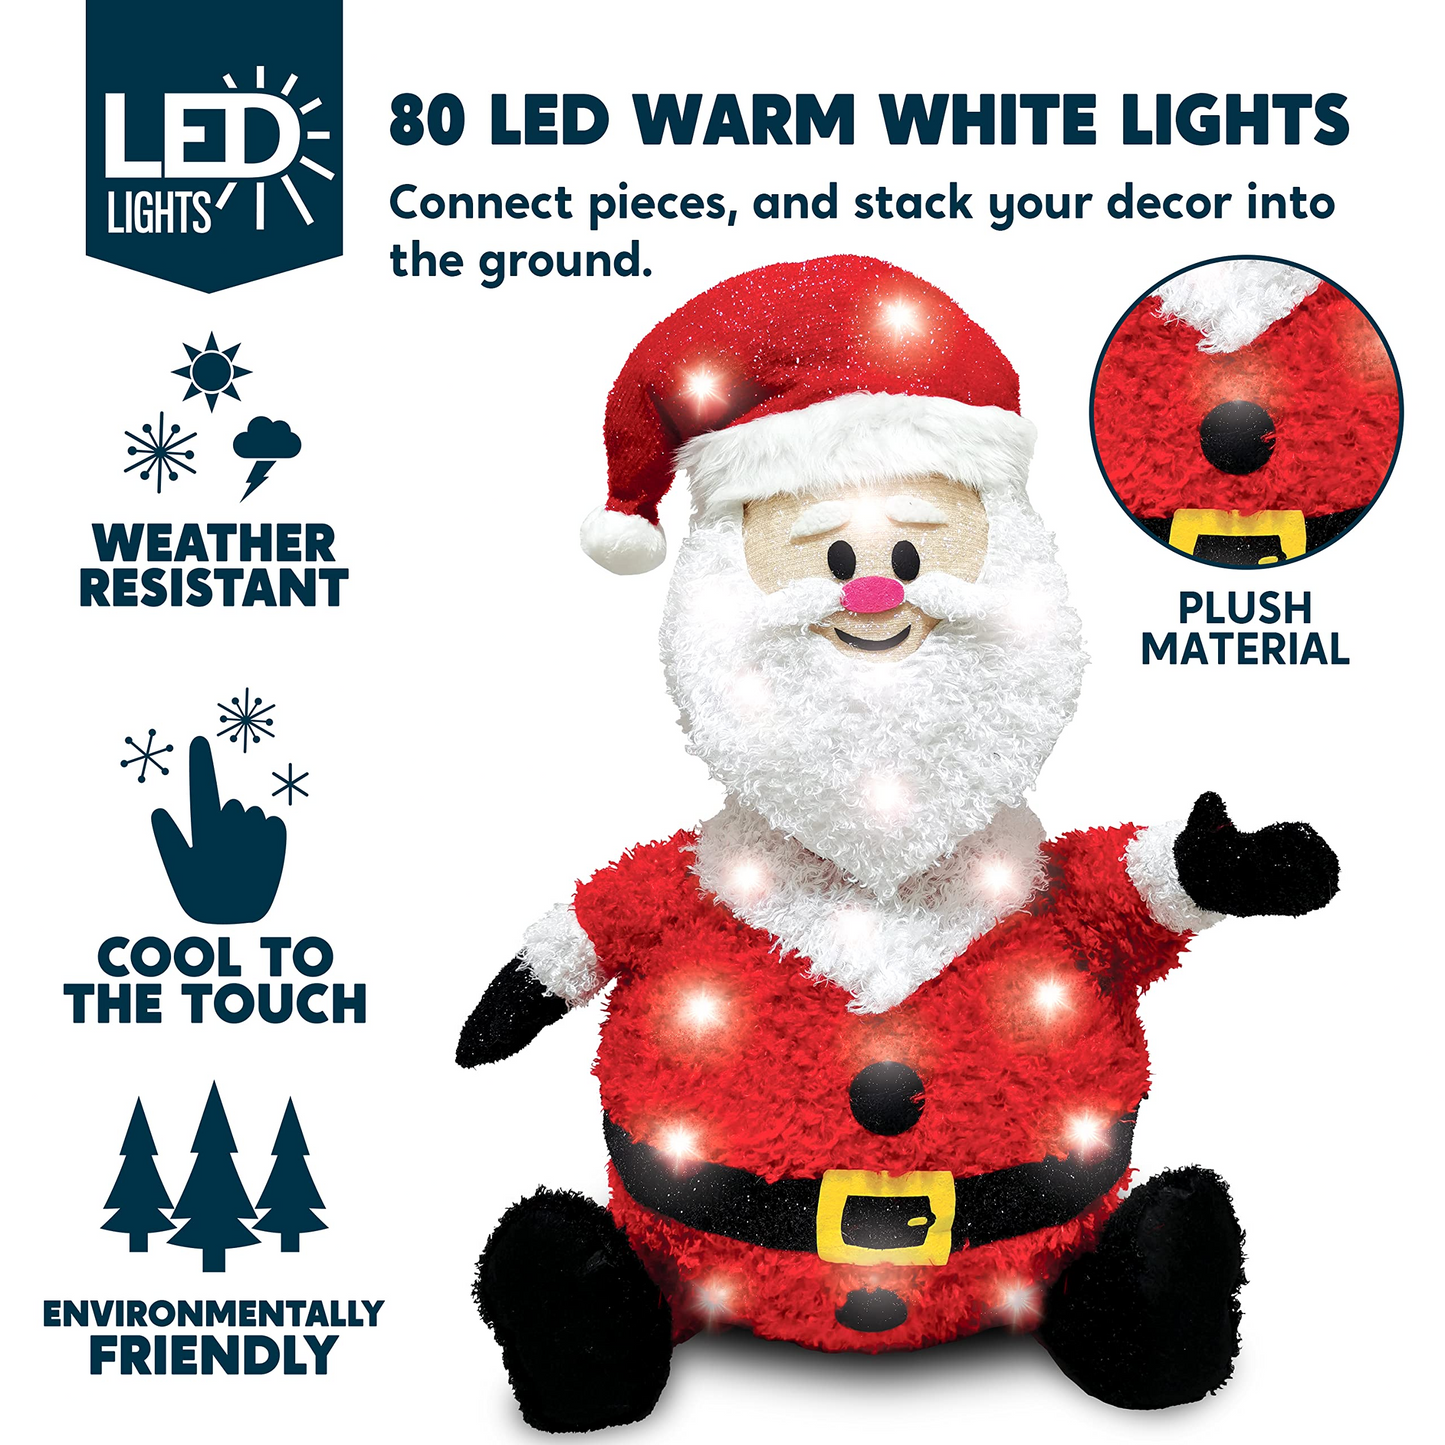 Collapsible Santa LED Yard Light